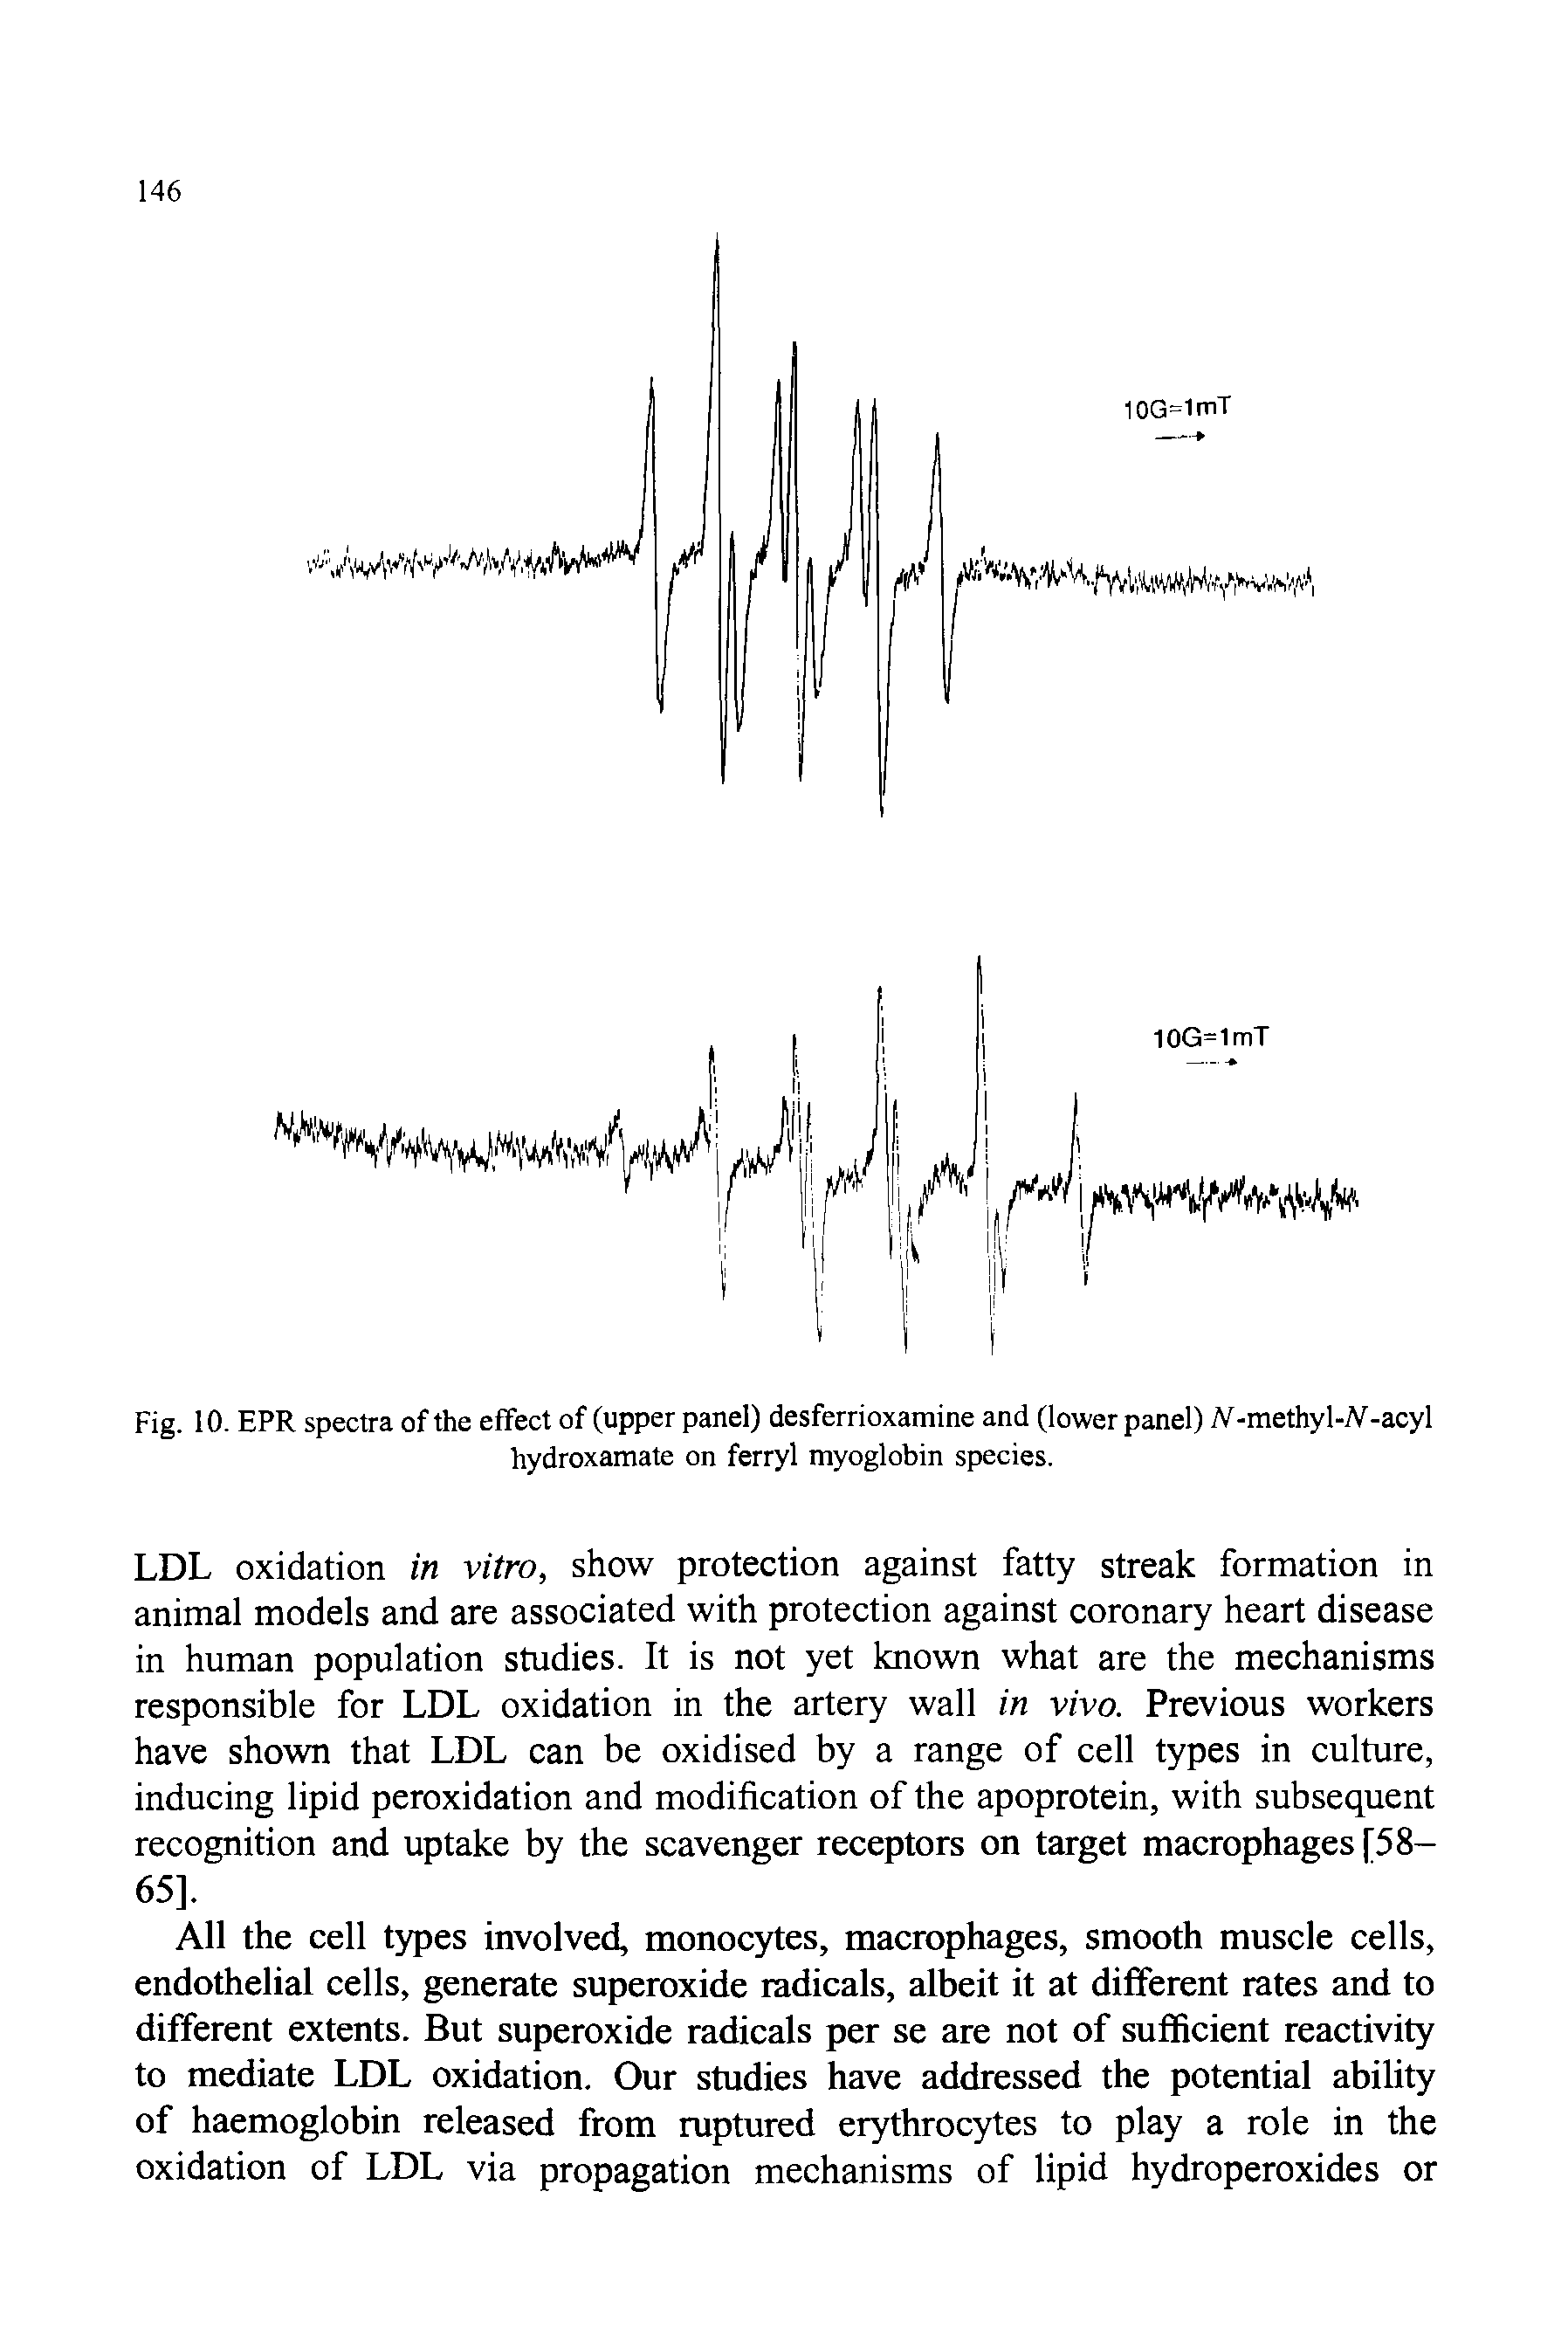 Fig. 10. EPR spectra of the effect of (upper panel) desferrioxamine and (lower panel) A -methyl-V-acyl hydroxamate on ferryl myoglobin species.